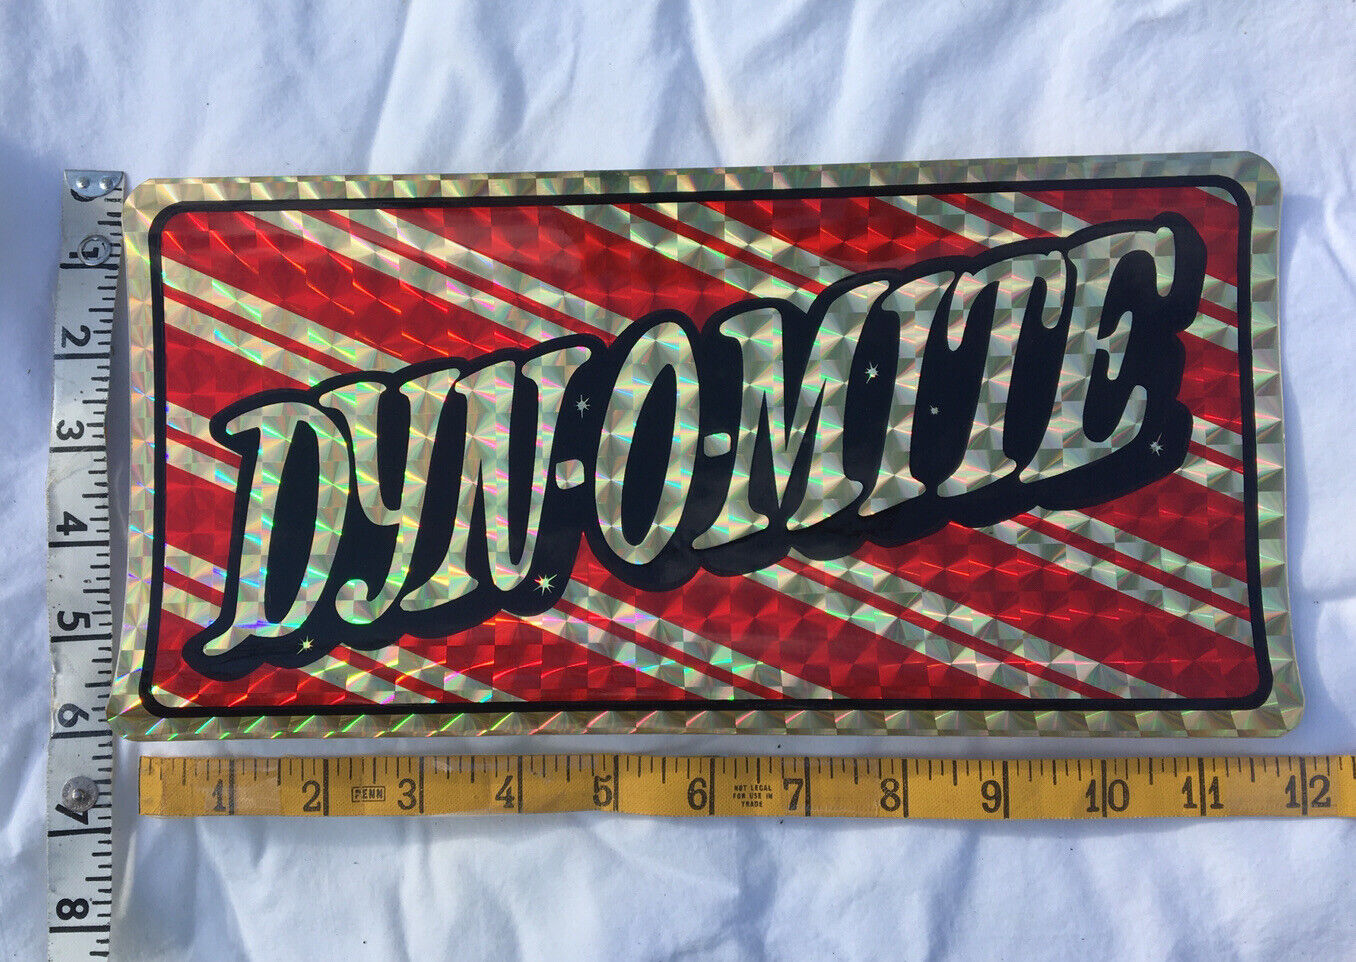 Vintage Prismatic Decal License Plate 1970s “Dyn-O-Mite” Prism Sticker NOS